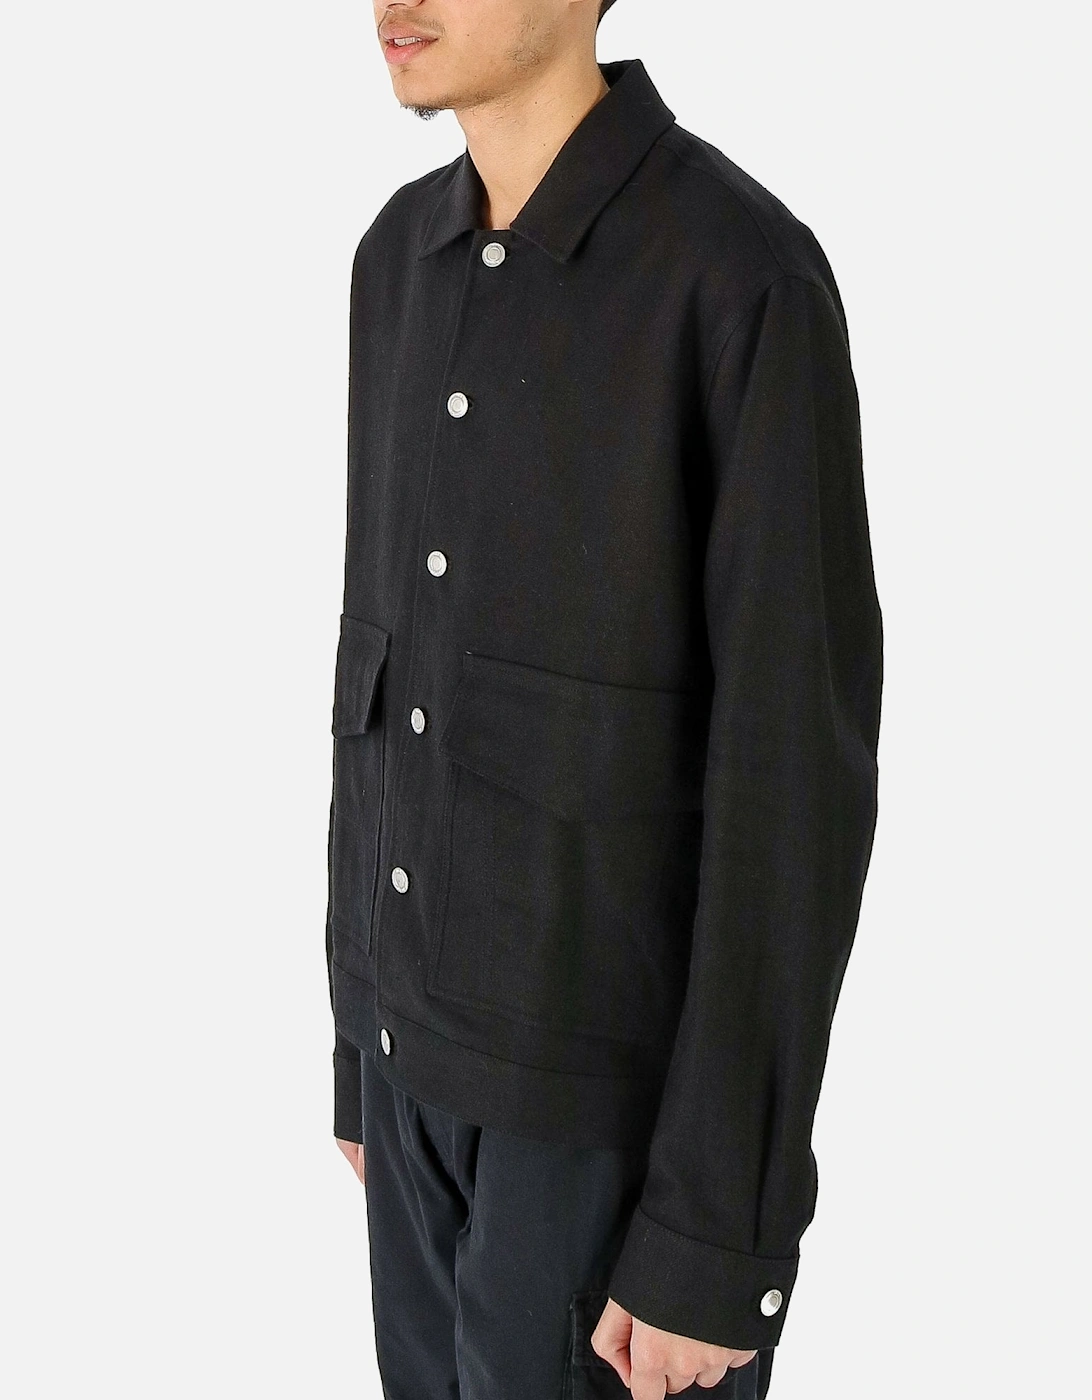 Mitford Linen Cotton Black Jacket